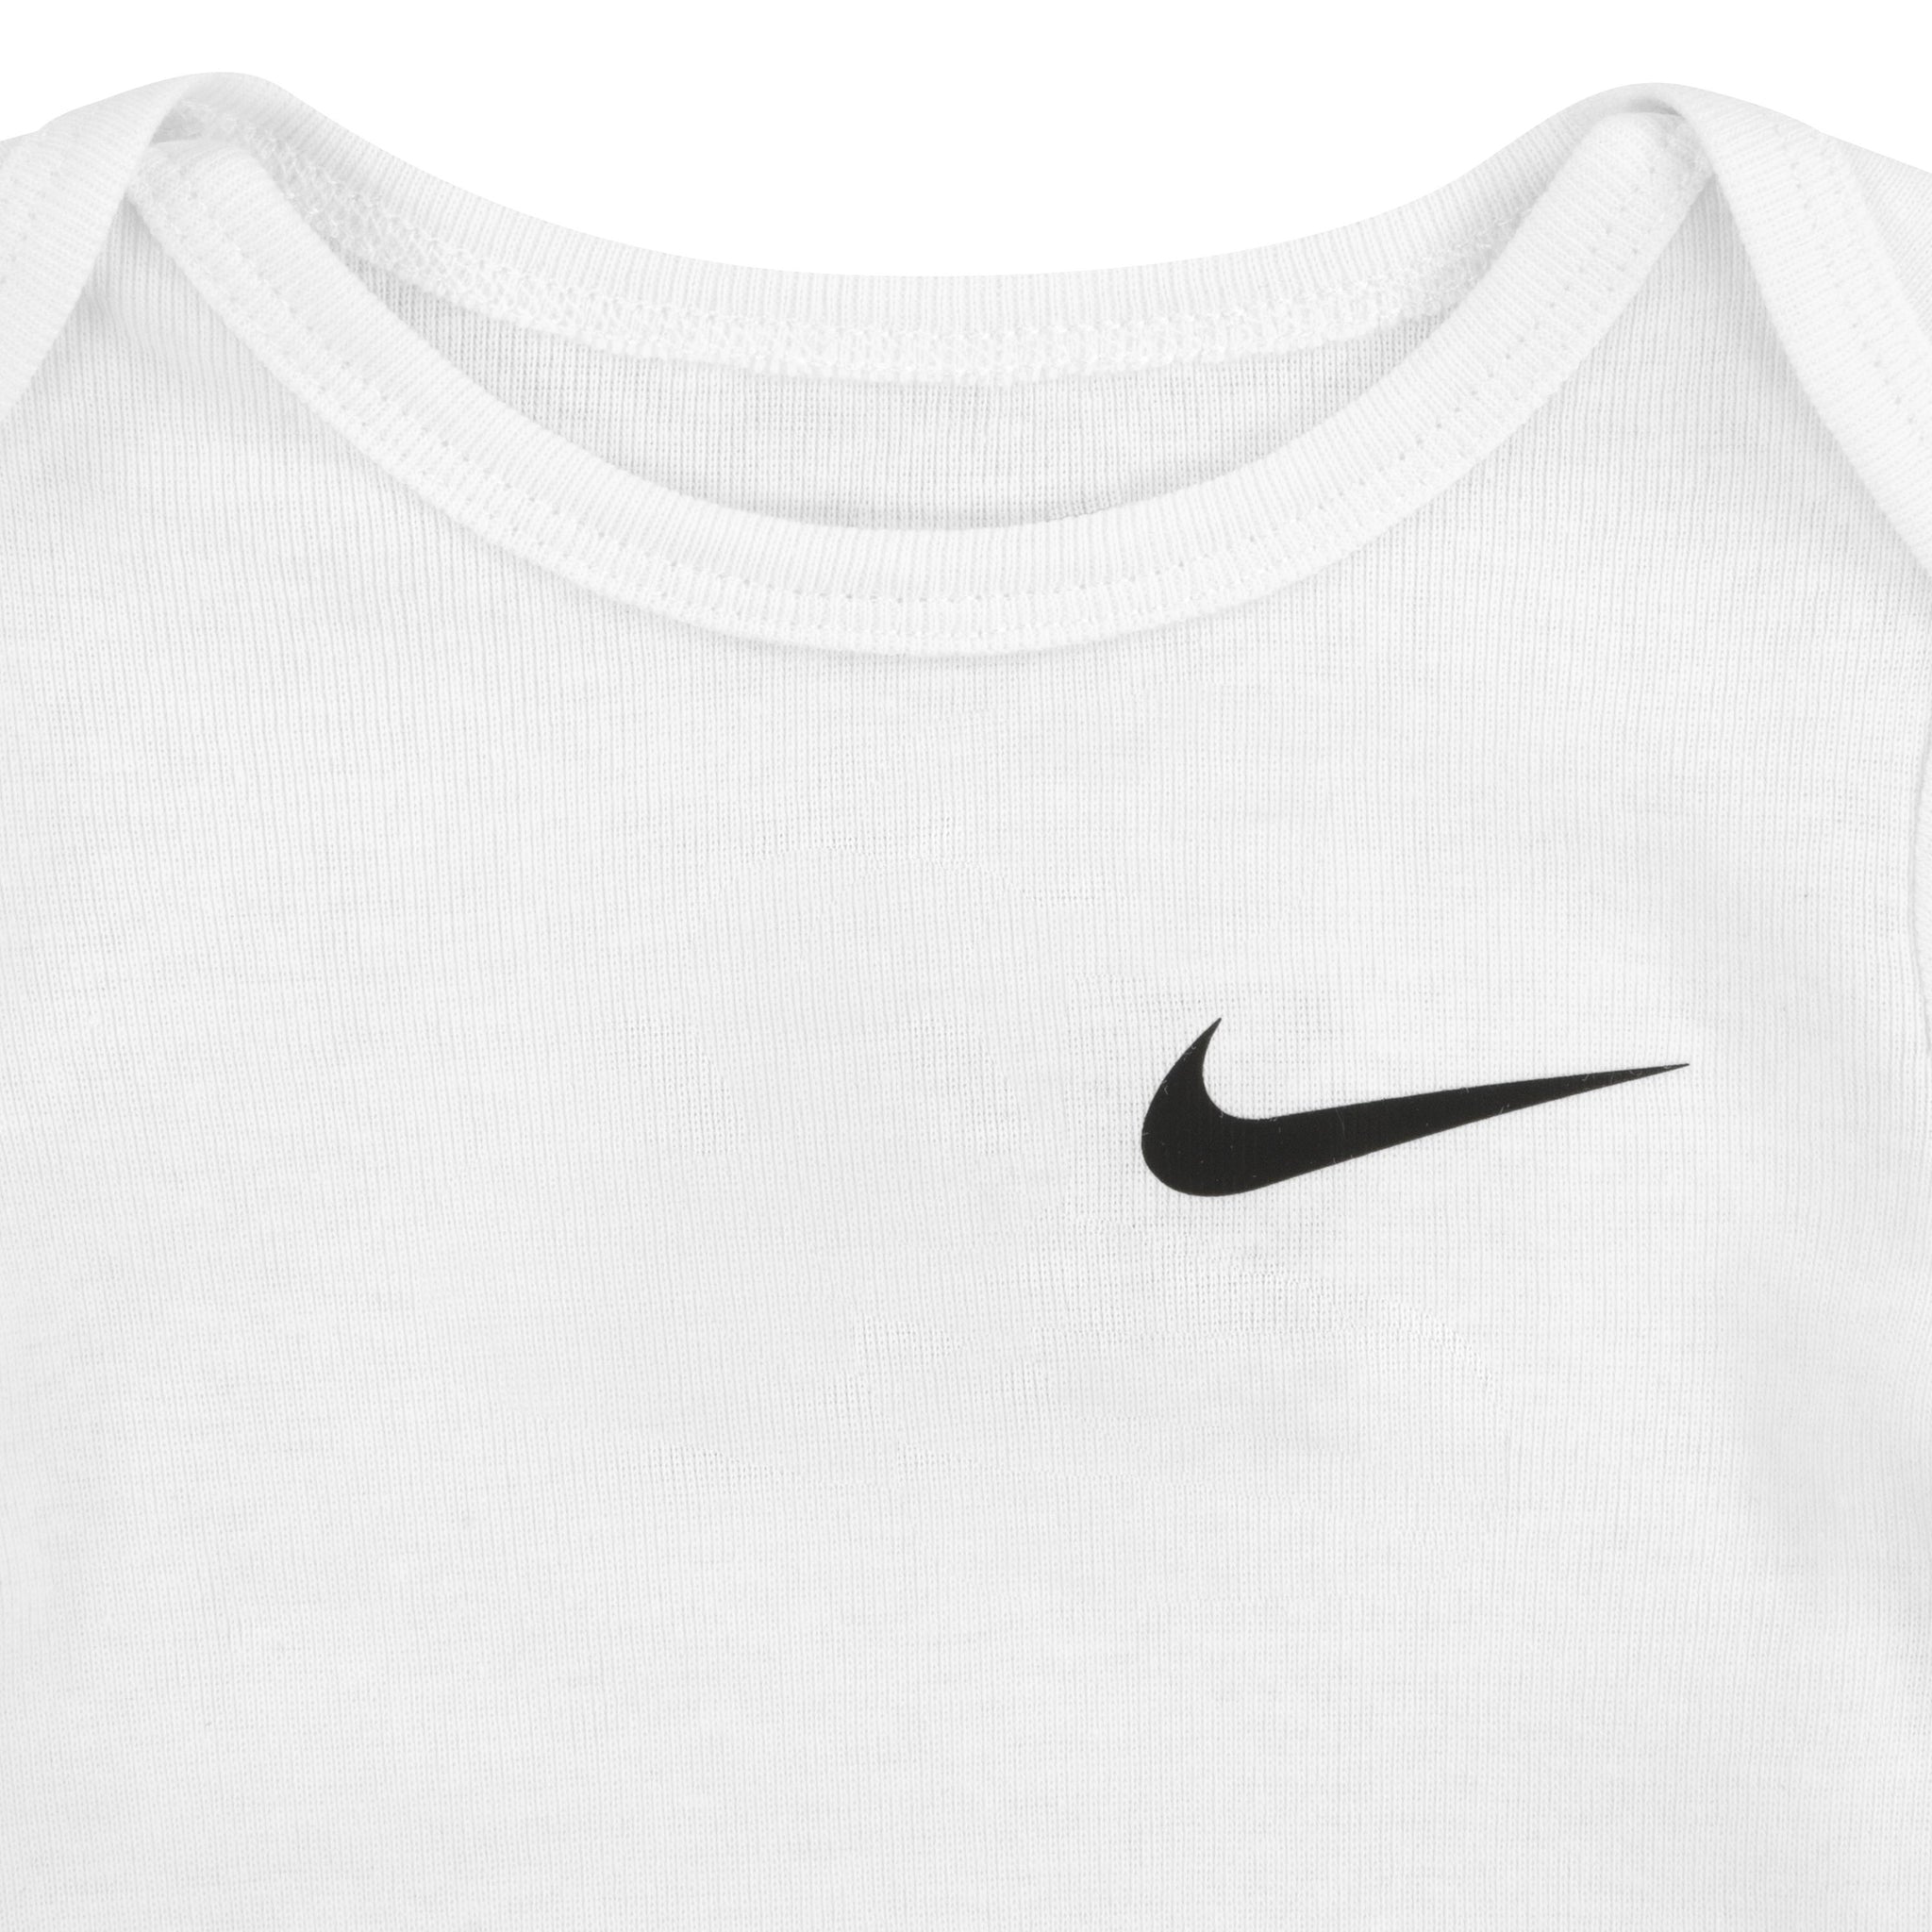 Nike Baby Essentials 3 Pack Bodysuit